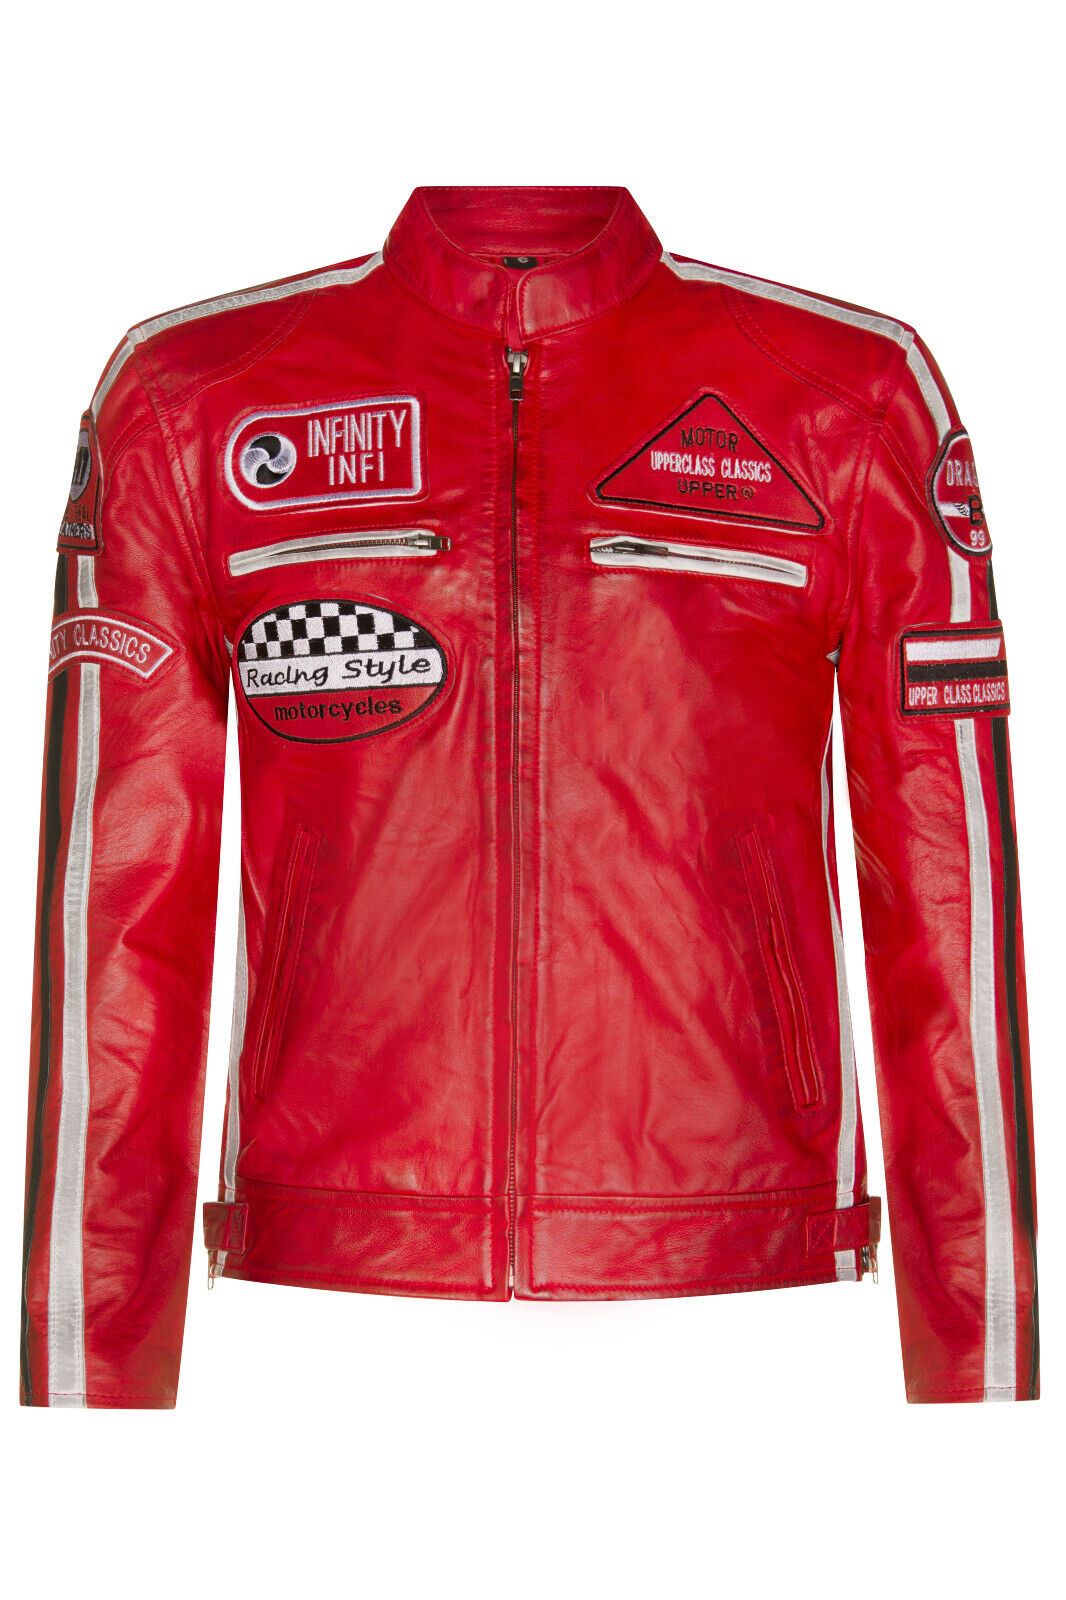 Mens Versatile Leather Biker Jacket-Stone